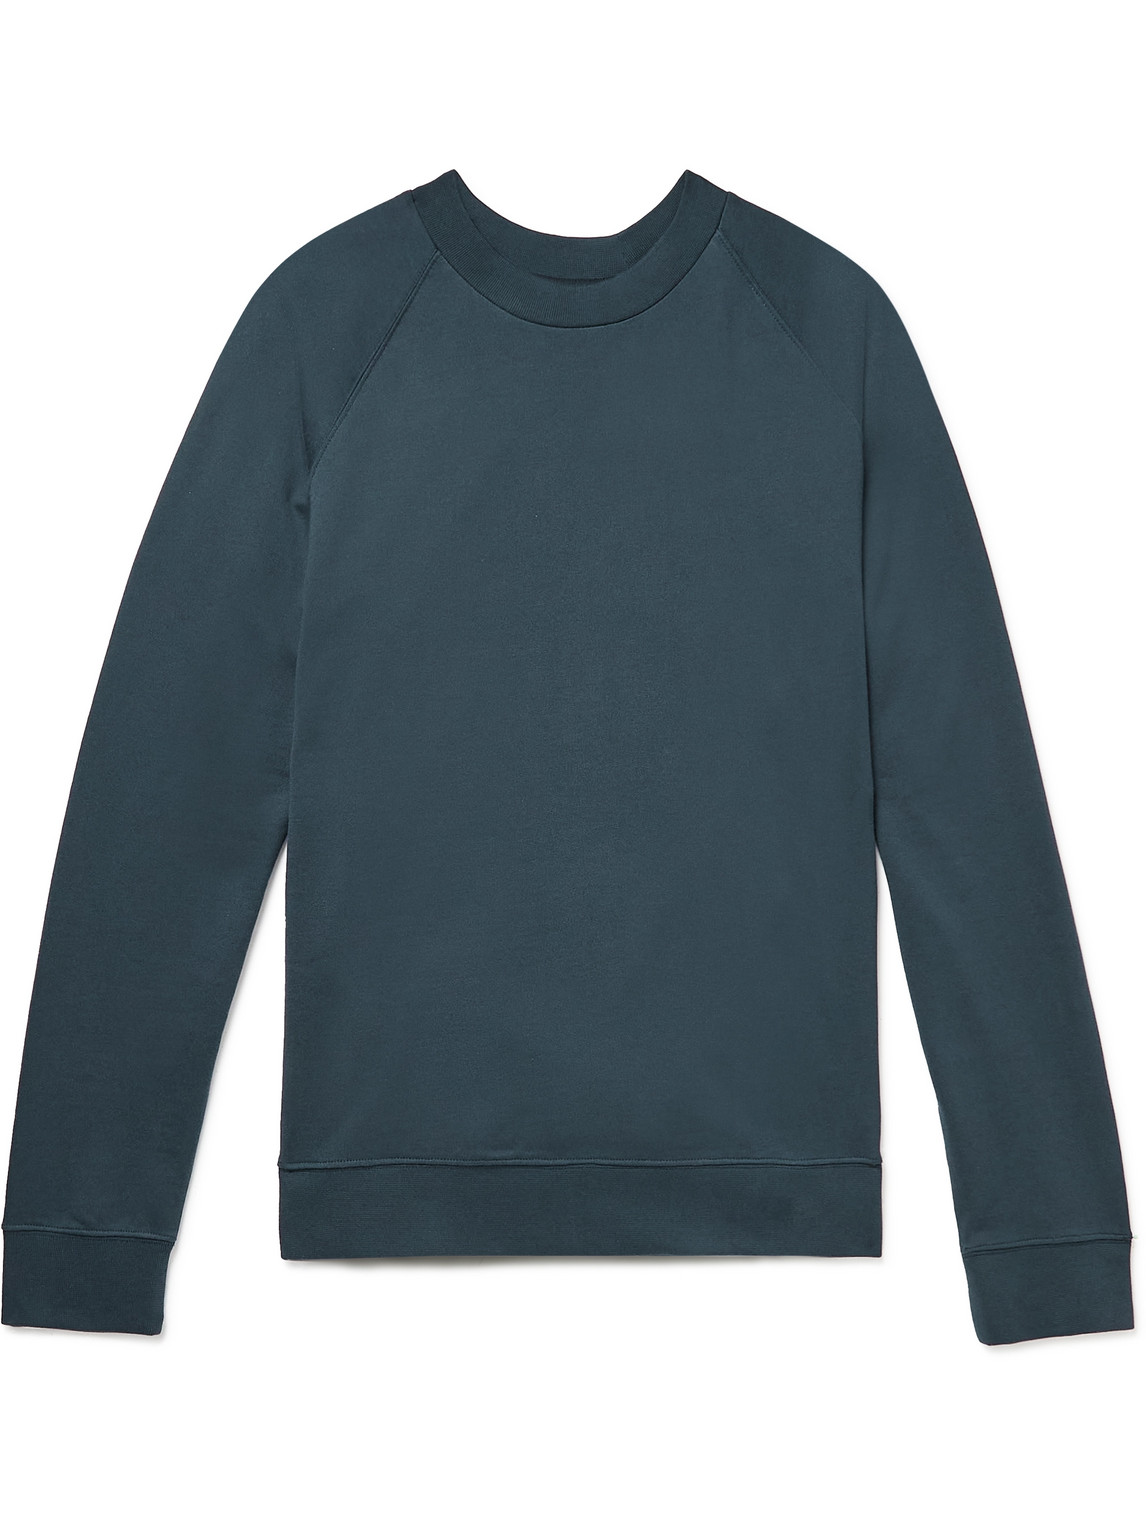 Sea Island Cotton-Jersey Sweatshirt